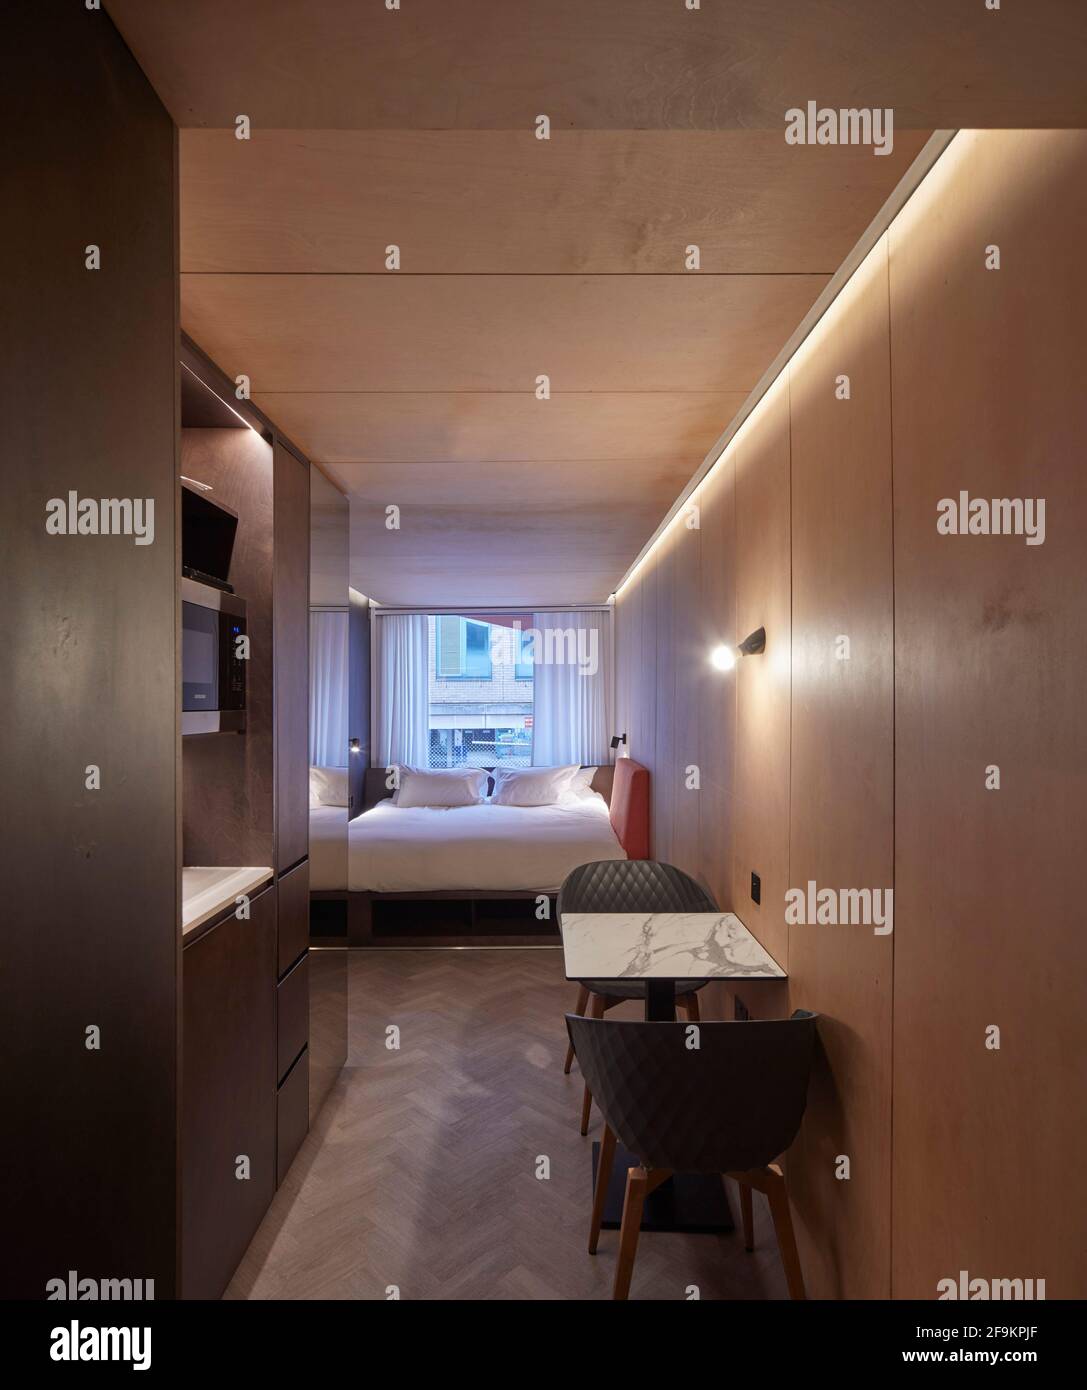 Bedroom interior. Stow-Away Waterloo Hotel, London, United Kingdom. Architect: Doone Silver Kerr, 2019. Stock Photo